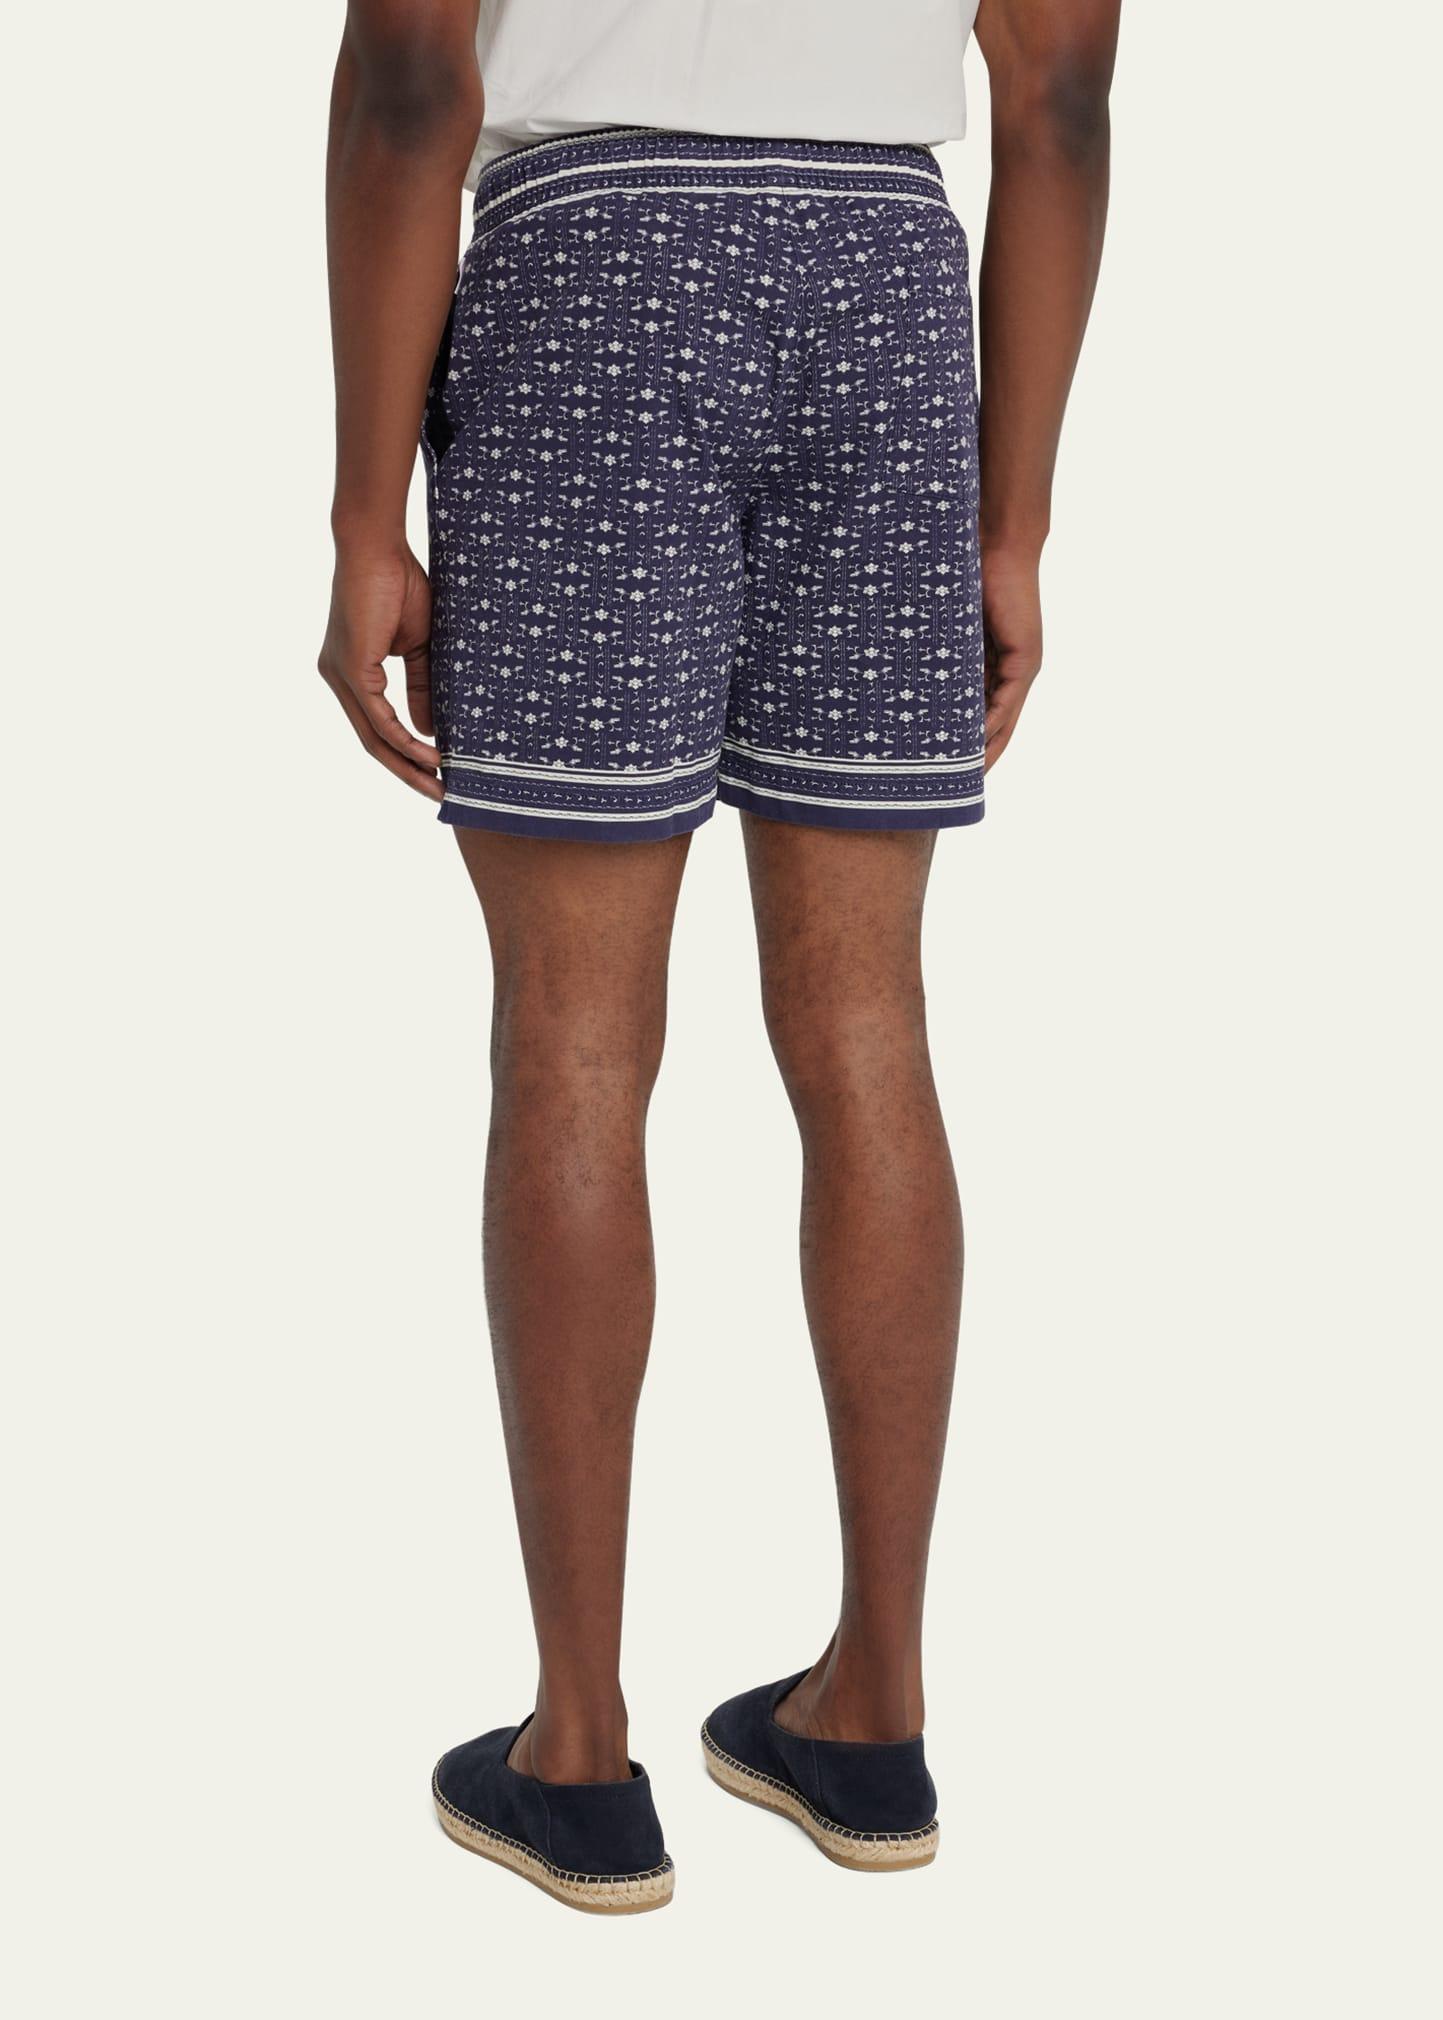 Mens Louis Vuitton Bandana Board Shorts Swim Suit